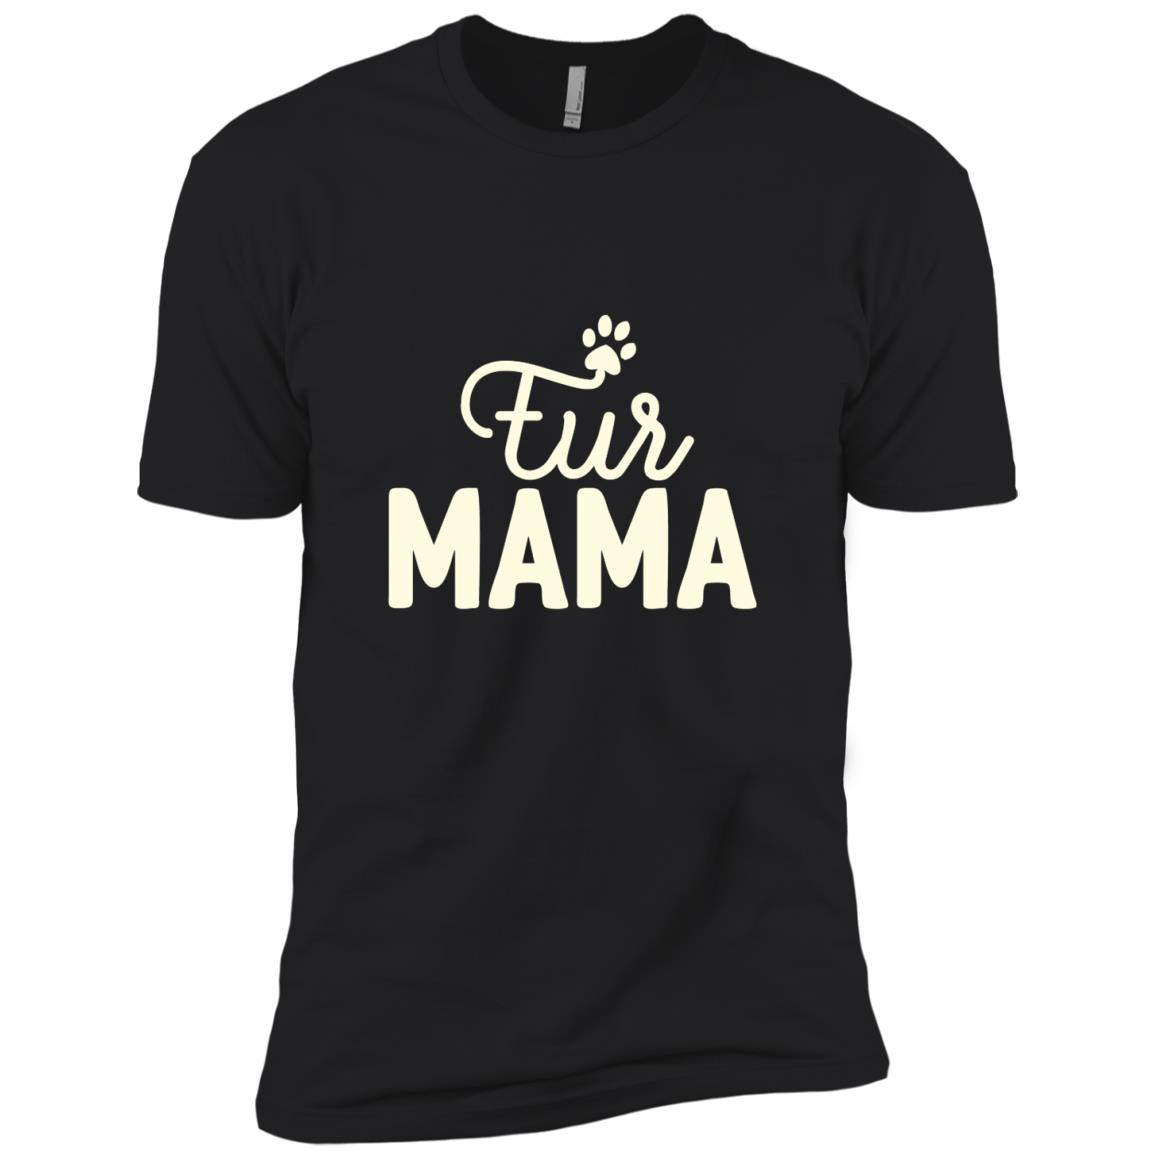 Fur Mama Premium Tee - iHeartDogs.com